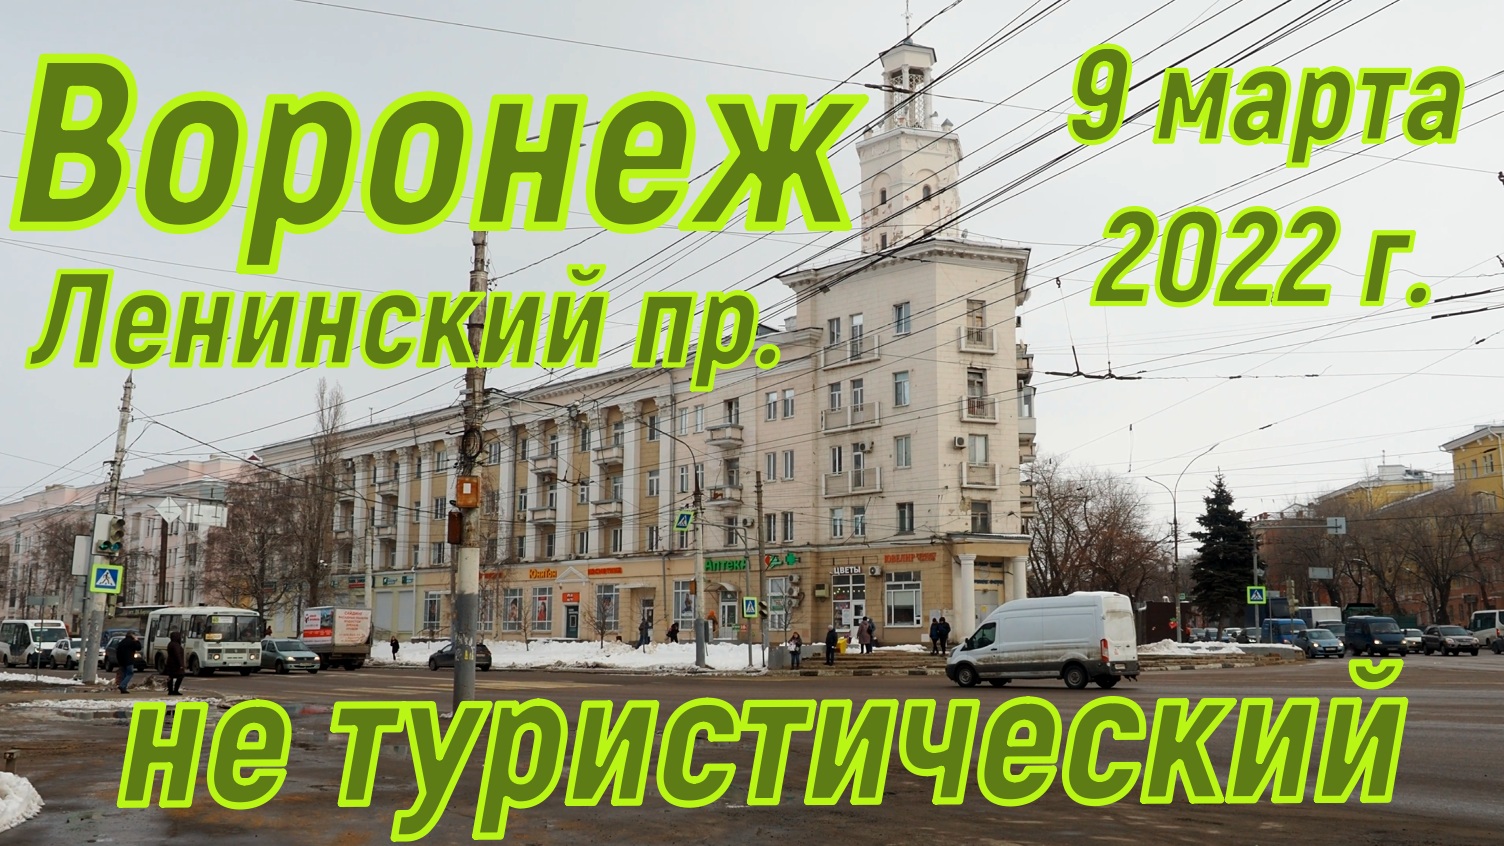 Воронеж не туристический, Ленинский пр. 9 марта 2022 г.mp4